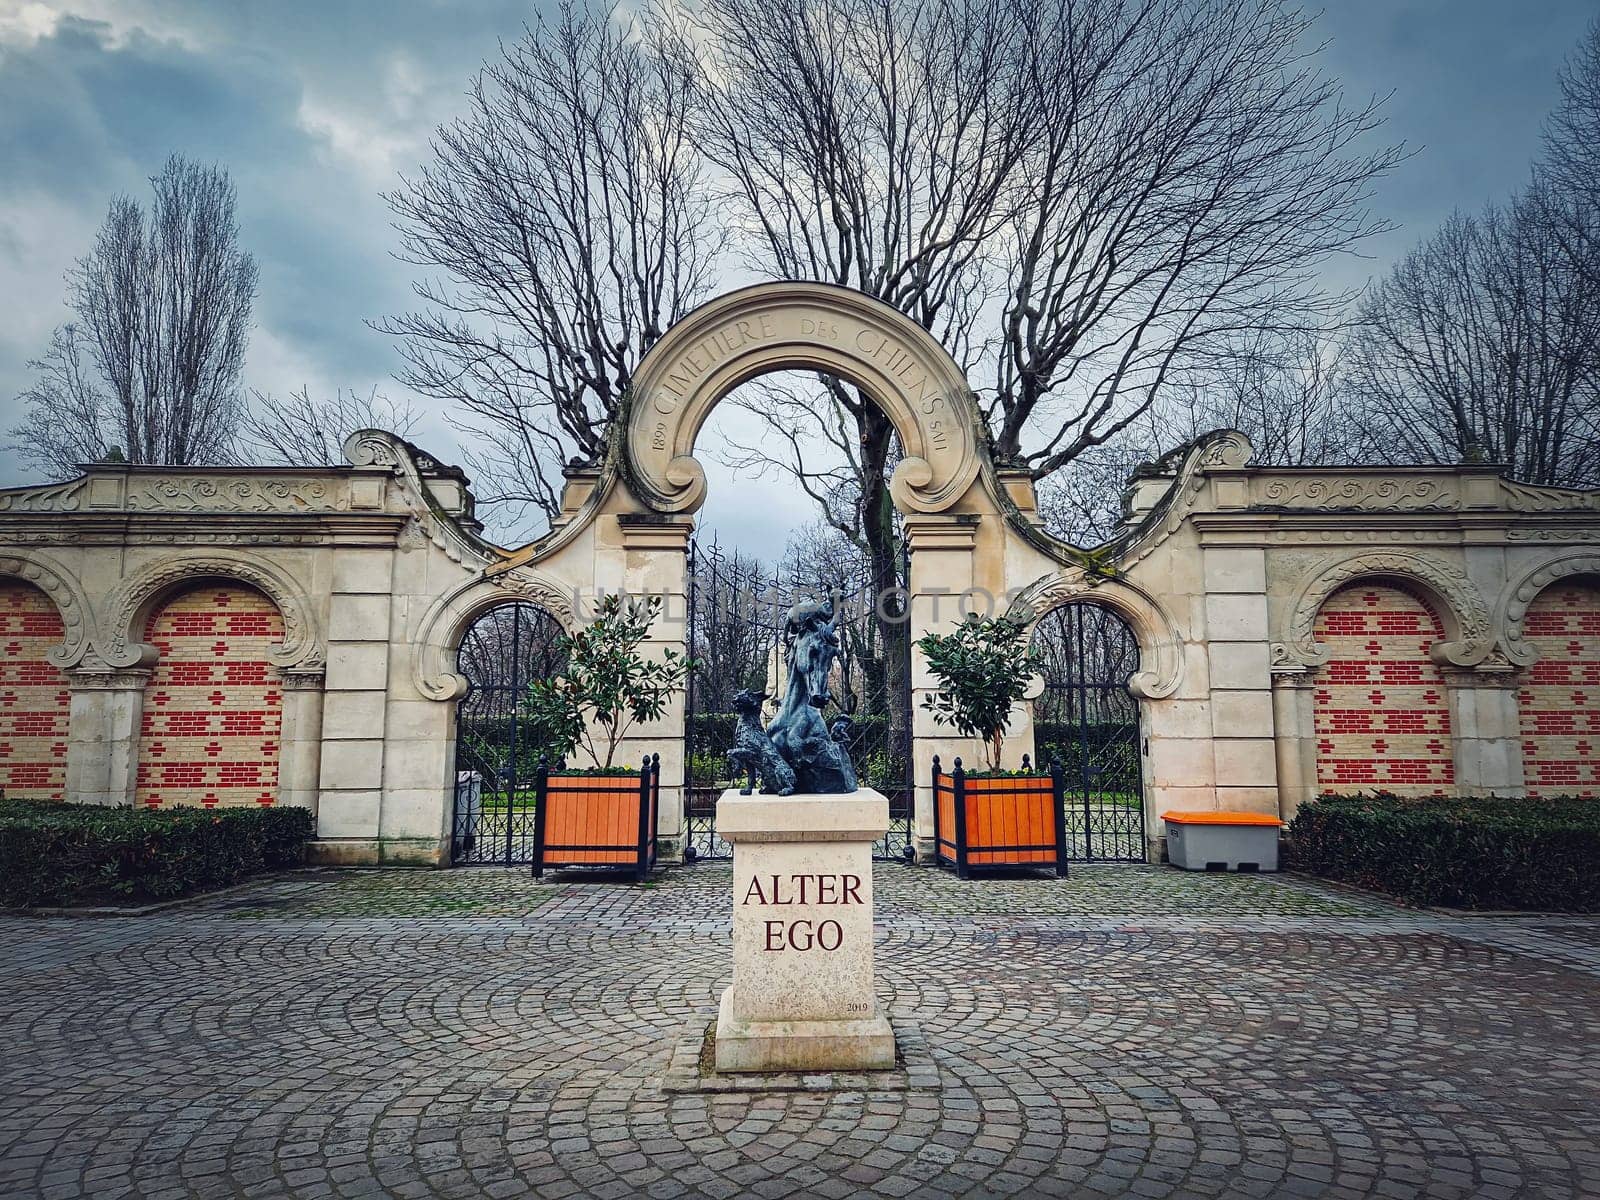 Dogs Cemetery (Cimetiere des Chiens) in Asnieres-sur-Seine, Paris France. View to the main gate and entrance to the world oldest public pet graveyard 
